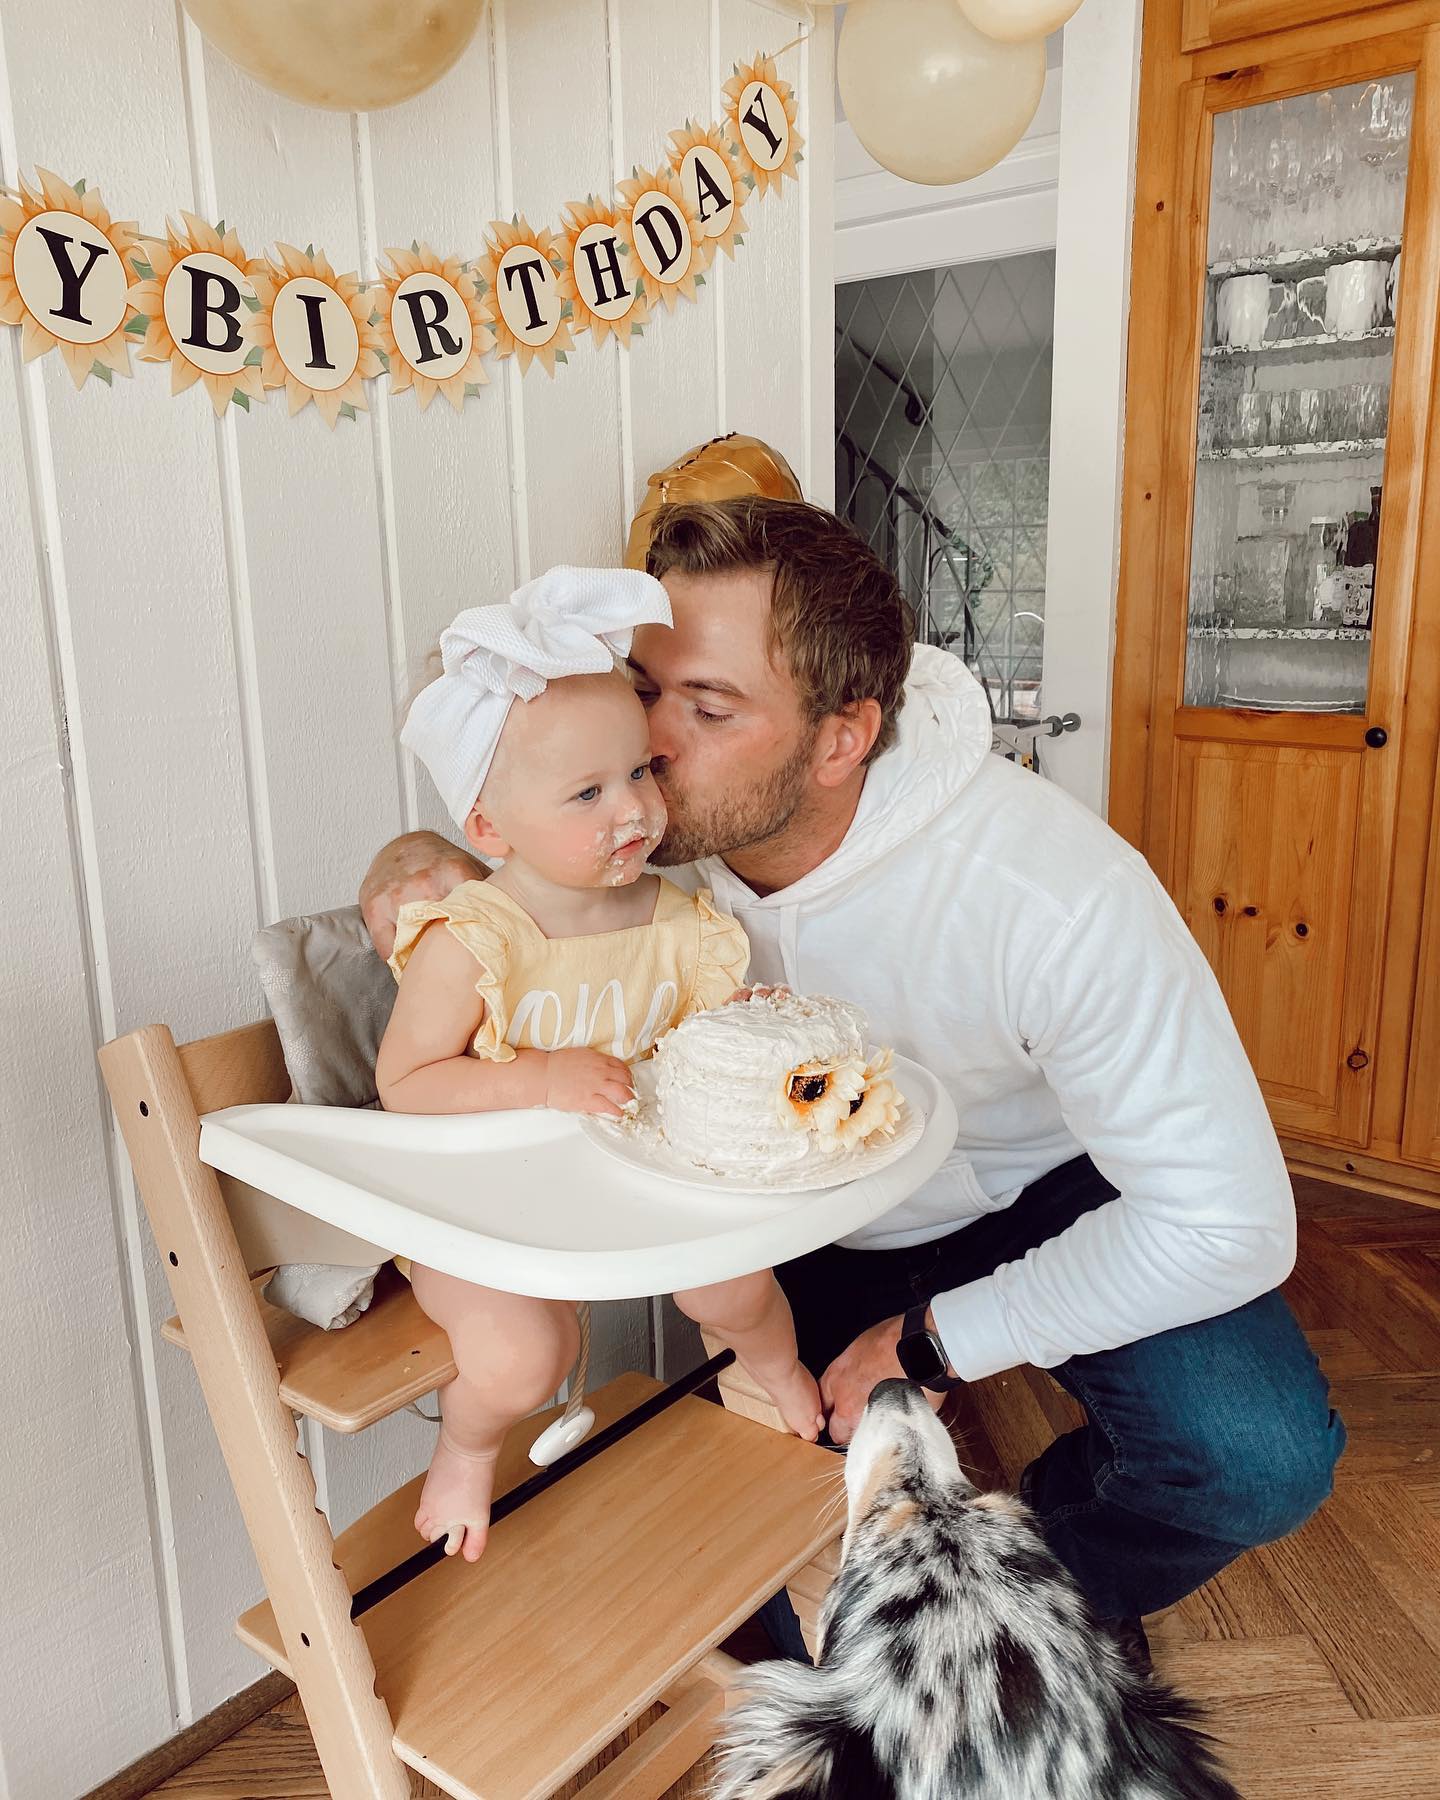 My ‘Sunshine’! Kellan Lutz Celebrates His Daughter Ashtyn’s 1st Birthday